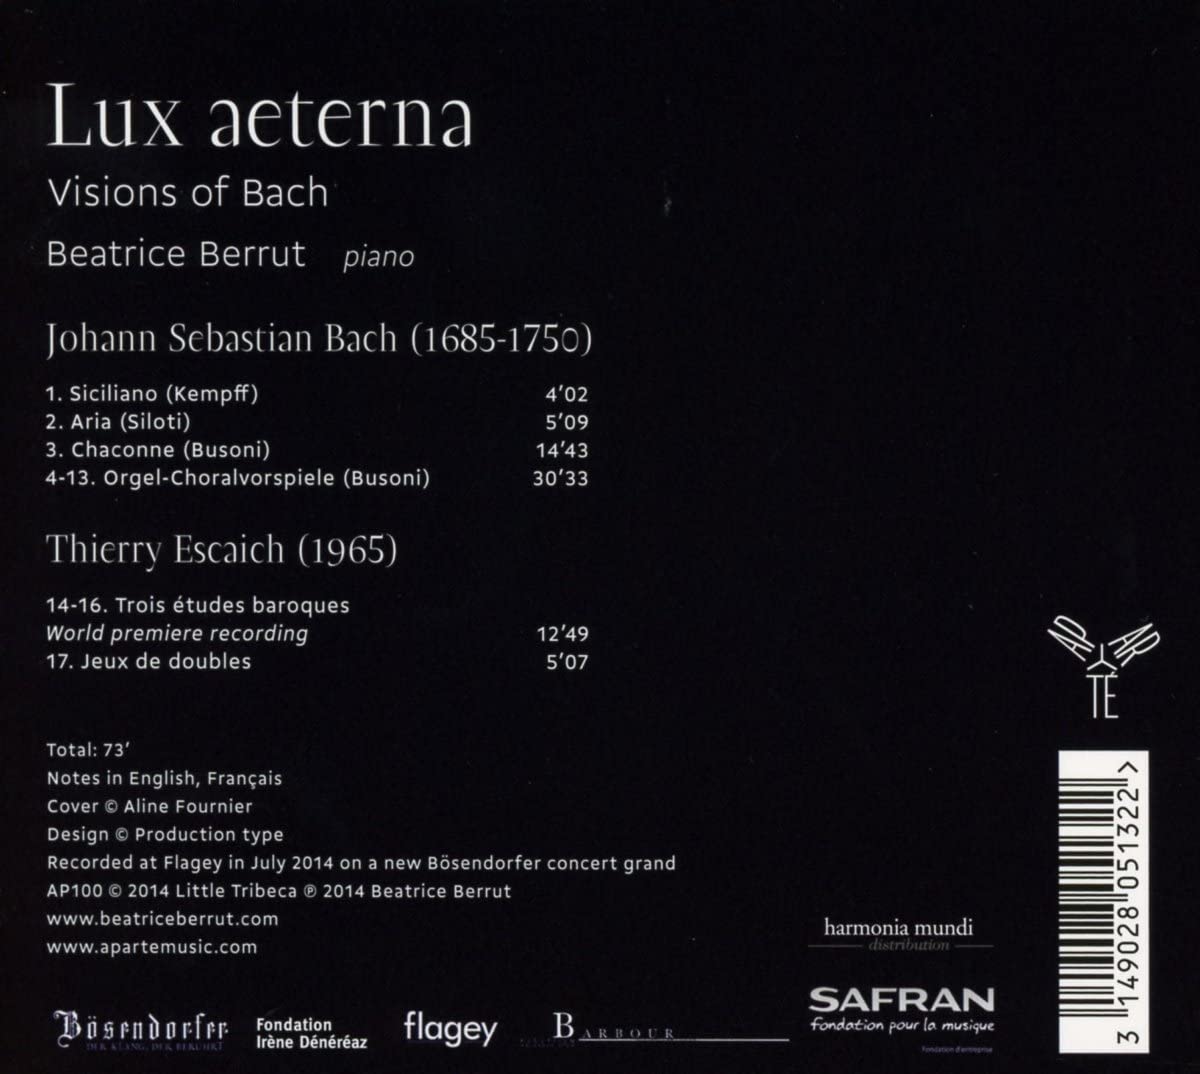 Lux aeterna - Visions of Bach - slide-1